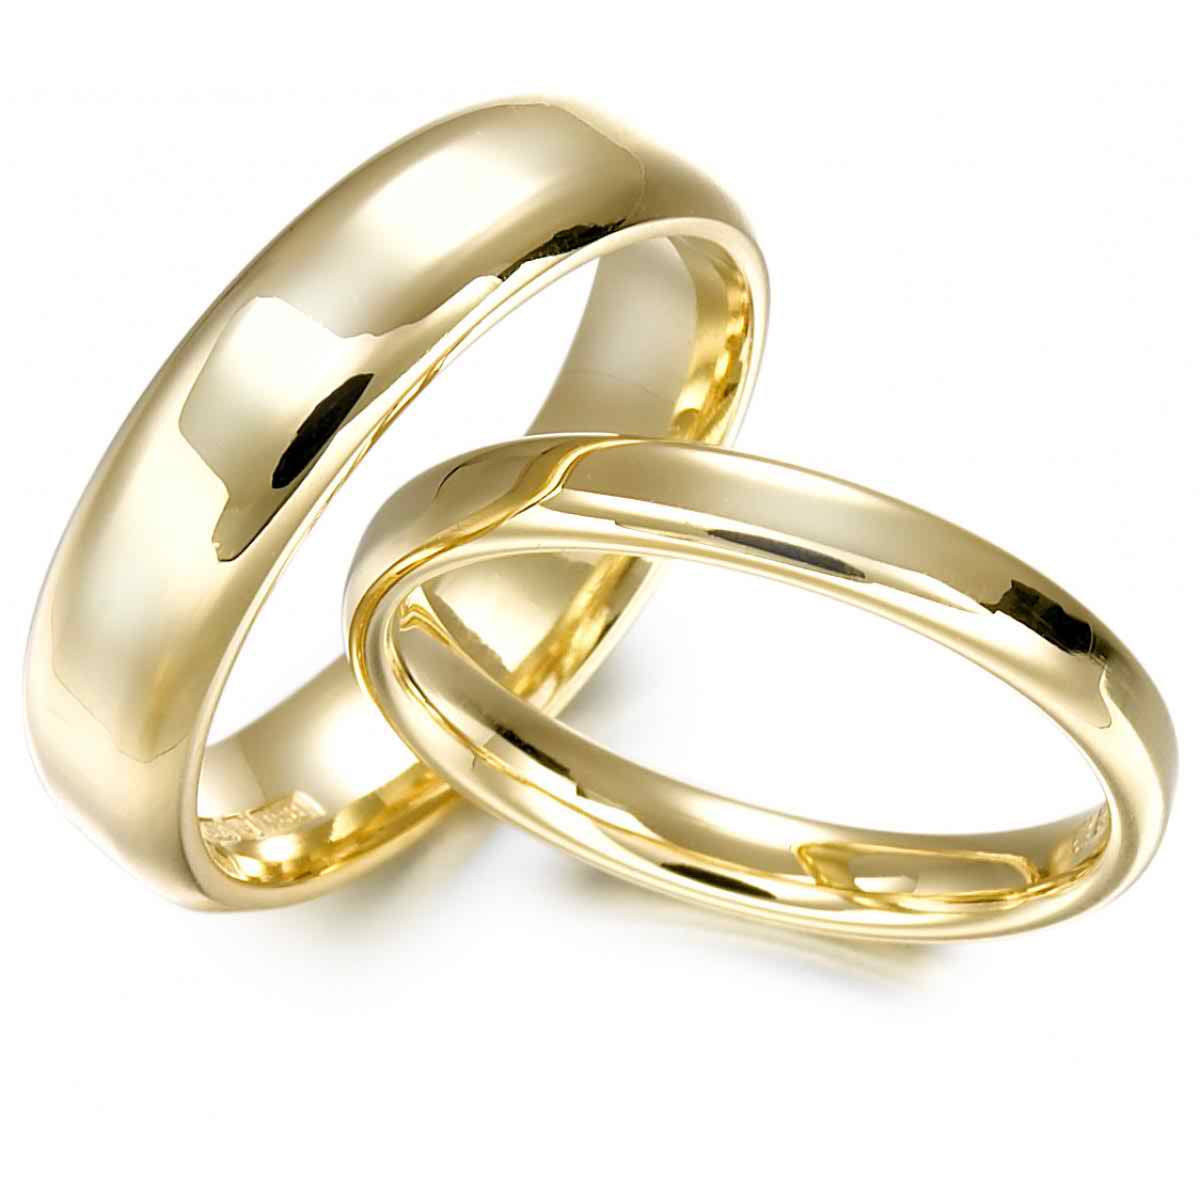 super wedding ring image